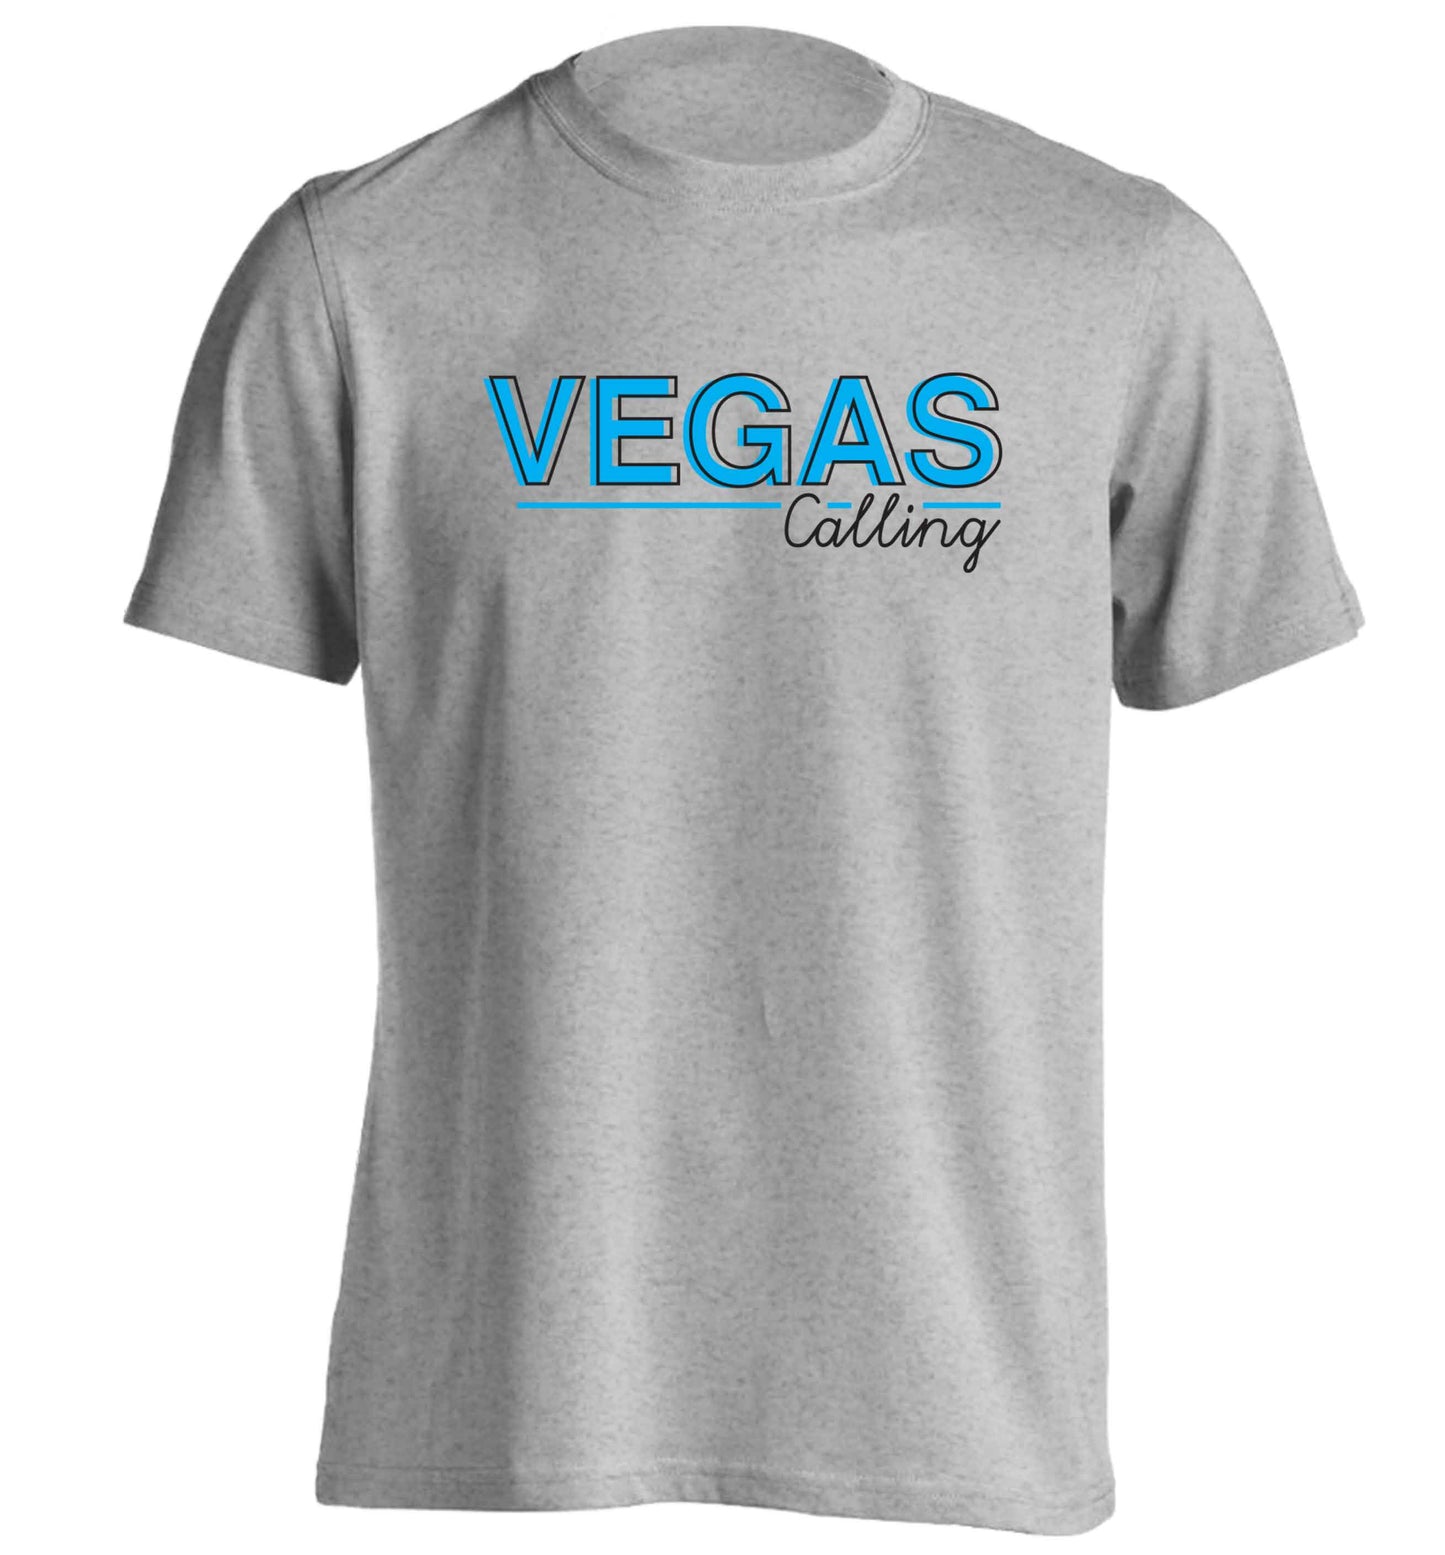 Vegas calling adults unisex grey Tshirt 2XL